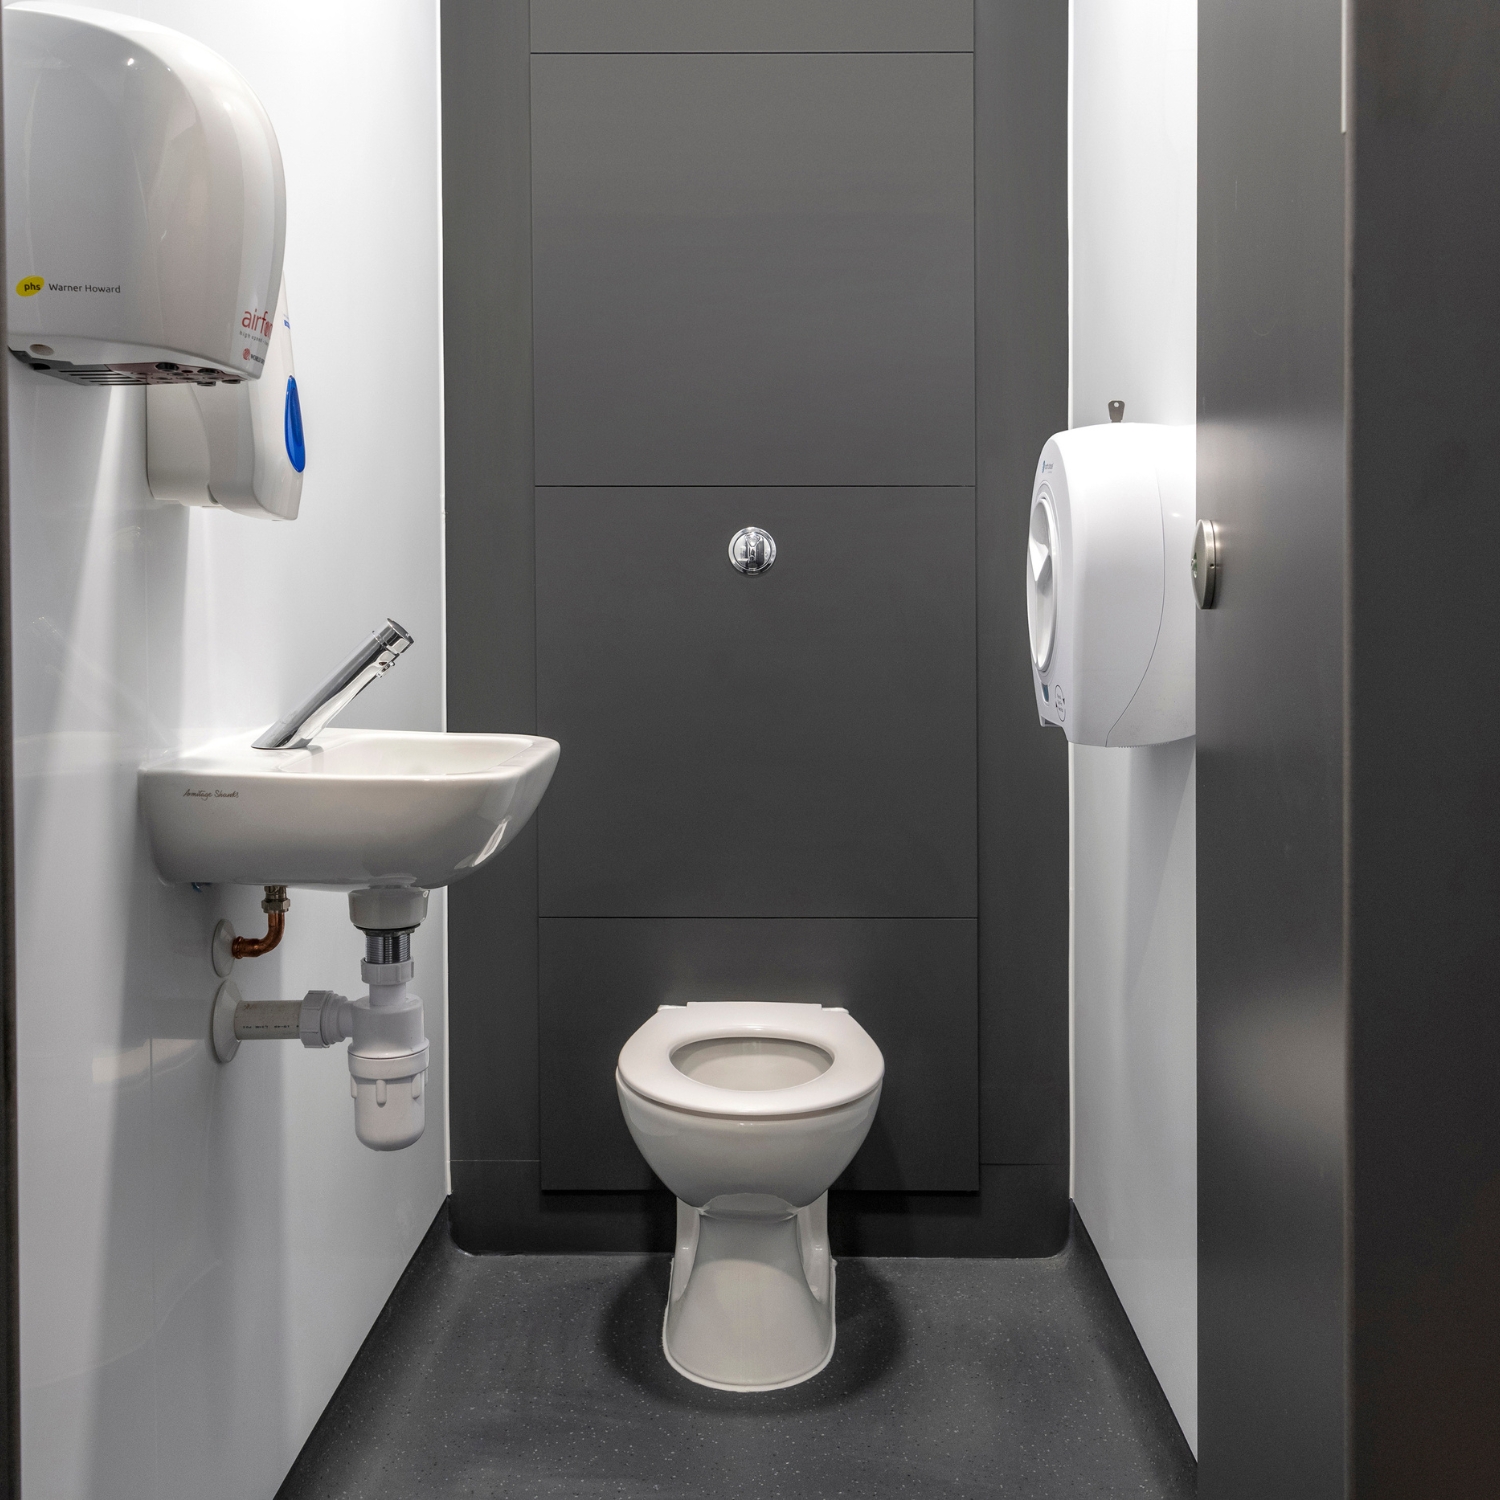 Washroom Fit-Out Company compact washroom refurbishment